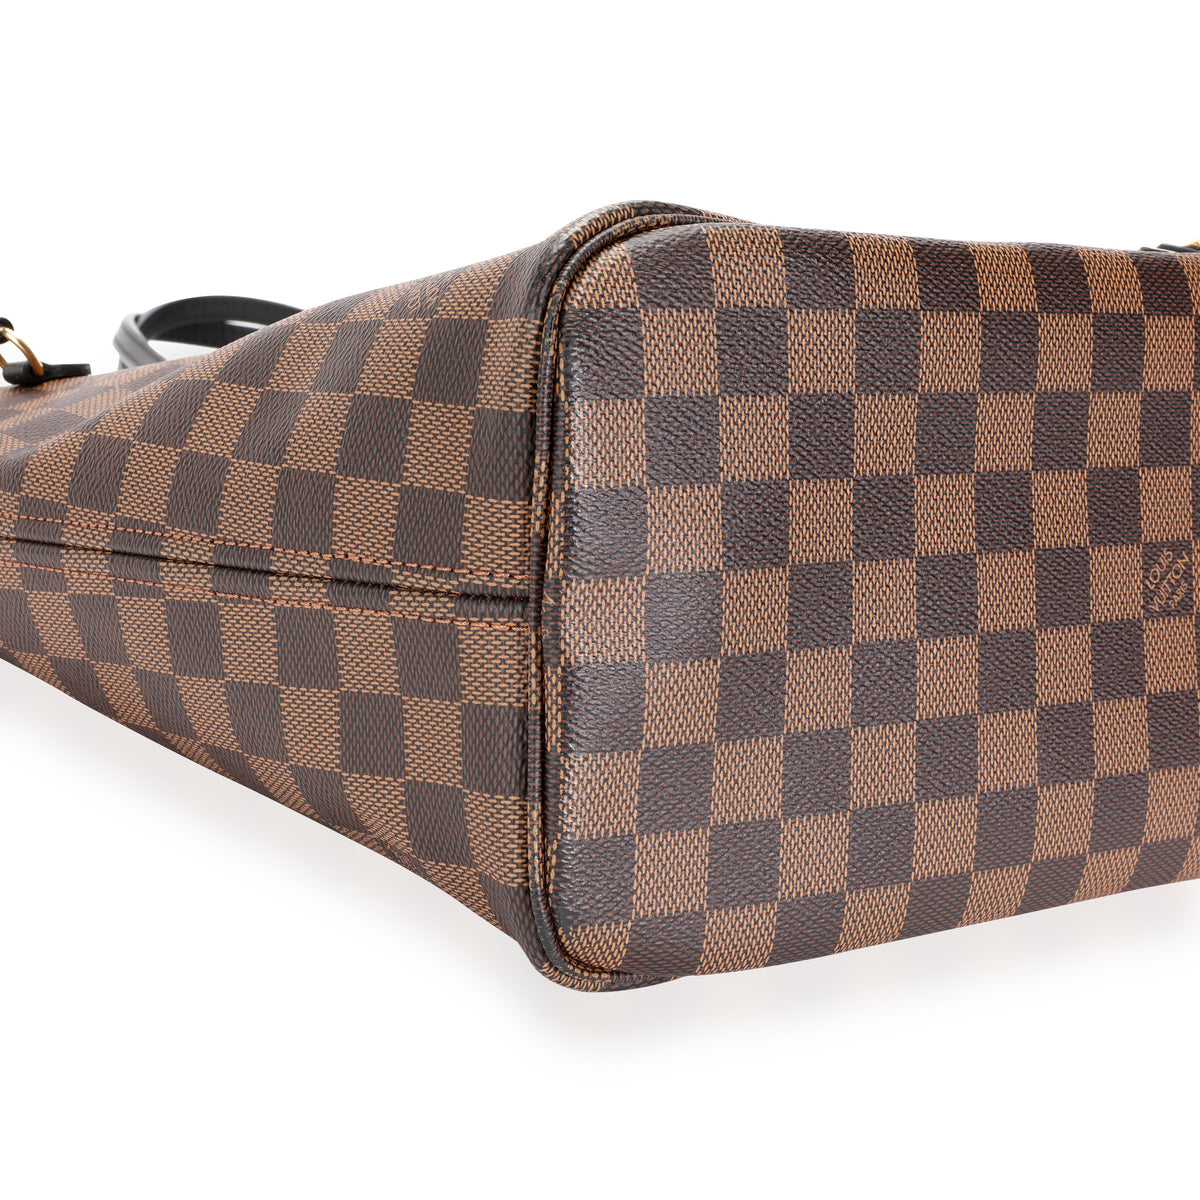 Louis Vuitton, Bags, Louis Vuitton Zippy Wallet Damier Ebene Karakoram Red  Brown Limited Edition